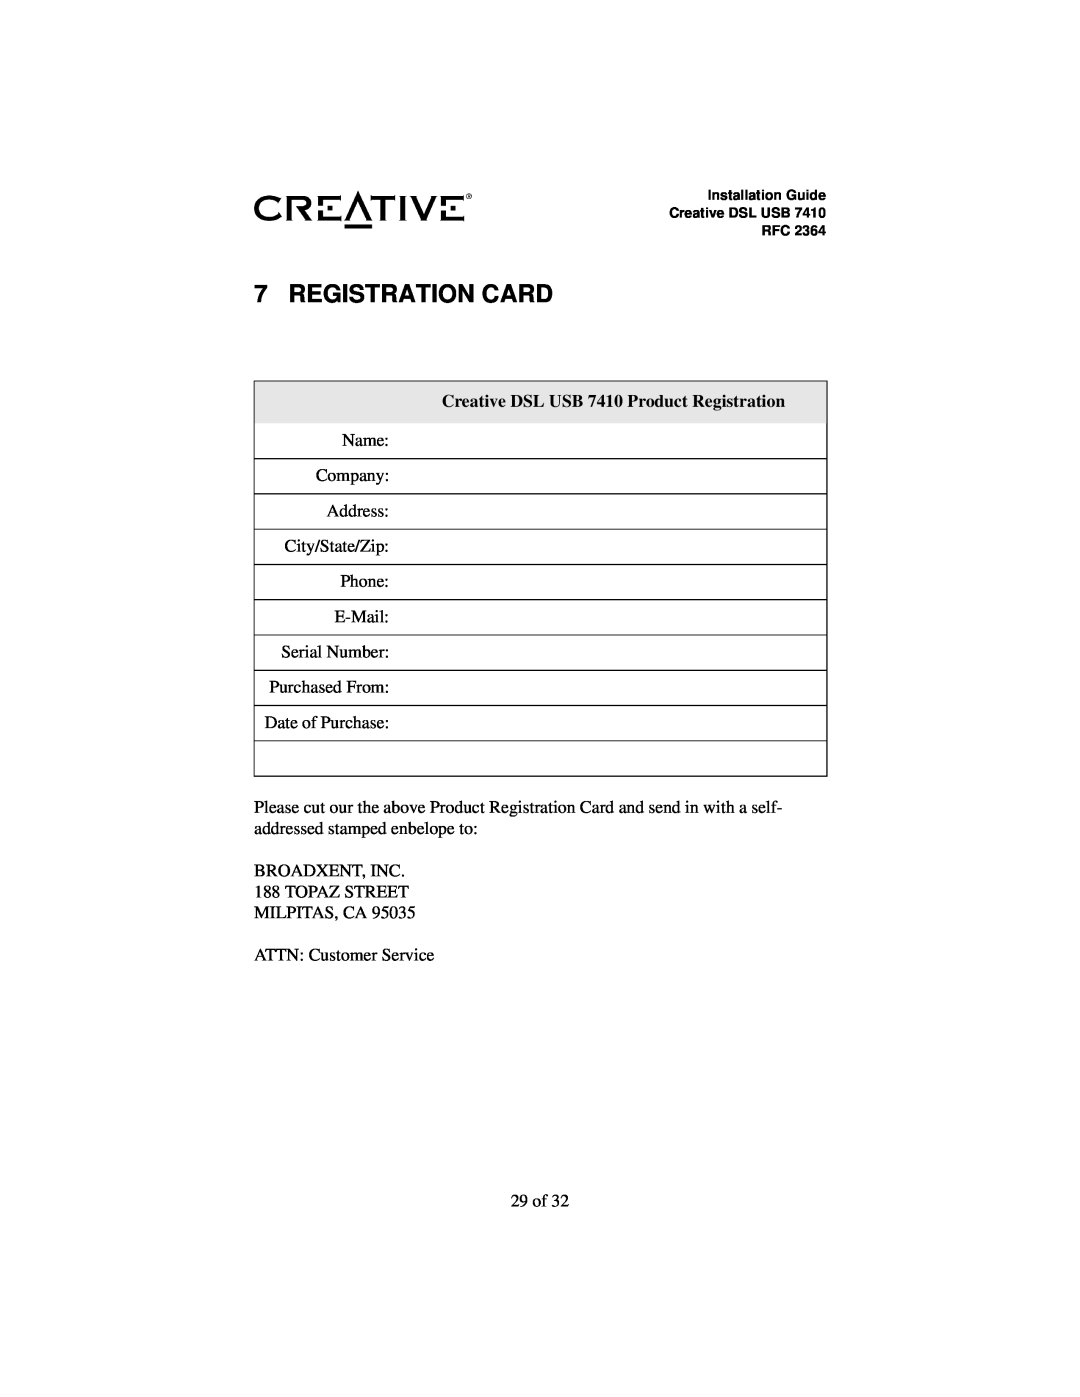 Creative RFC 2364 Registration Card, Creative DSL USB 7410 Product Registration, Installation Guide Creative DSL USB RFC 